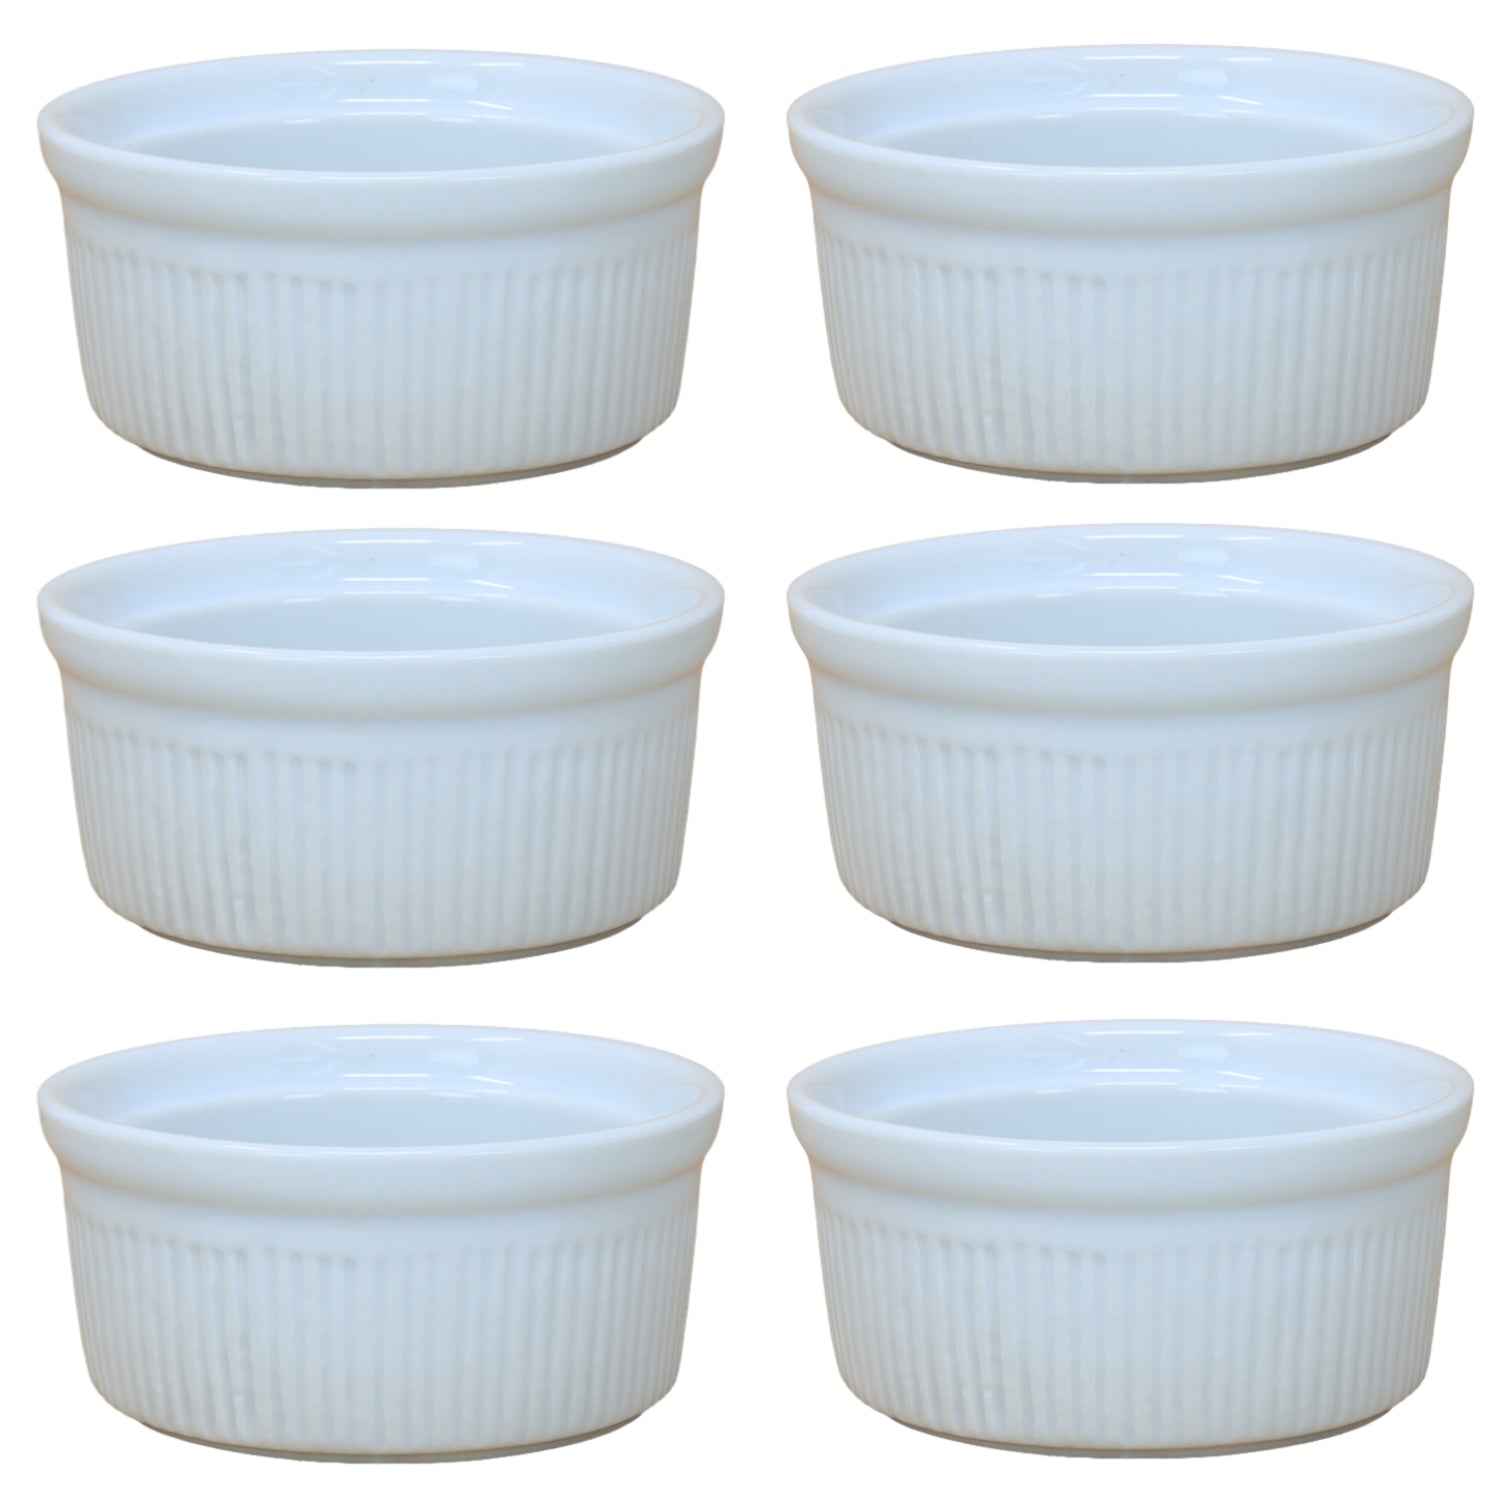 6Pcs 8cm Round Ceramic Ramekin Baking Cups Set